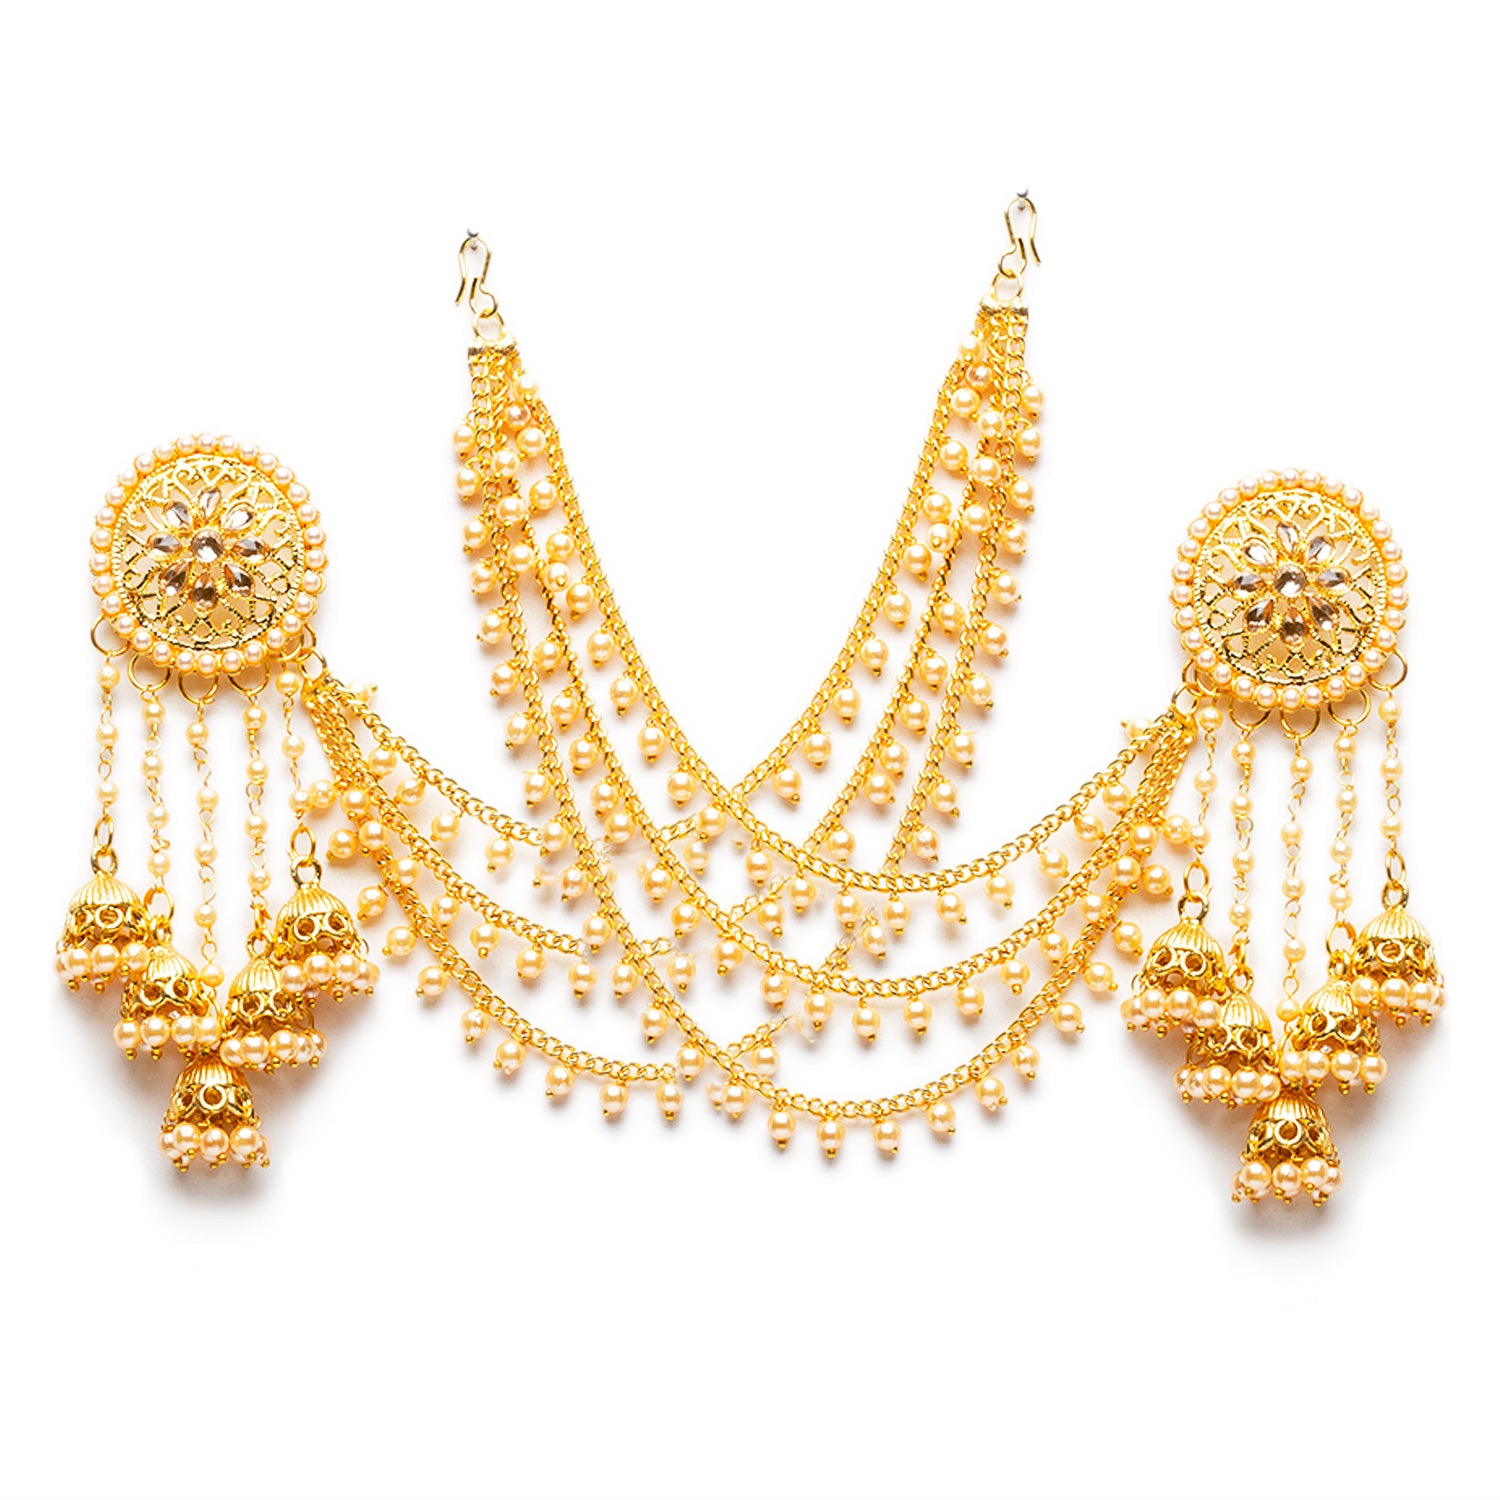 Premium Quality Mehndi Plated Ad Studded Bahubali Earrings - White, स्टड  इयररिंग, स्टड की कान की बाली - Parshva Jewels, Mumbai | ID: 2852577374397